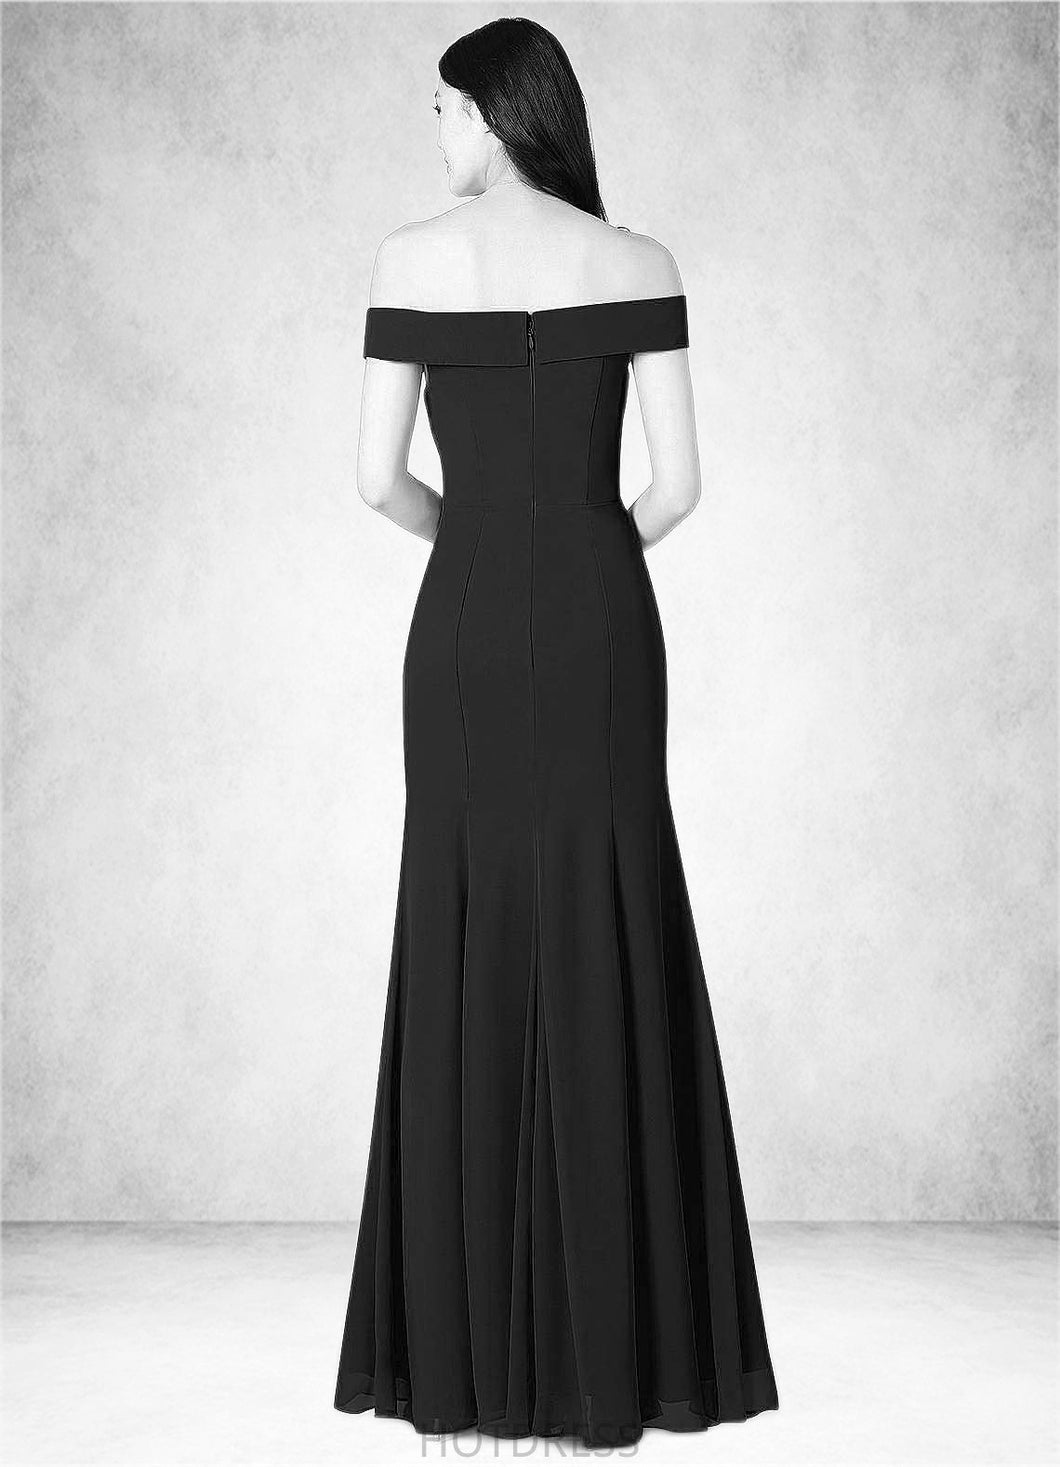 Catherine Empire Off the Shoulder Chiffon Floor-Length Dress P0019632